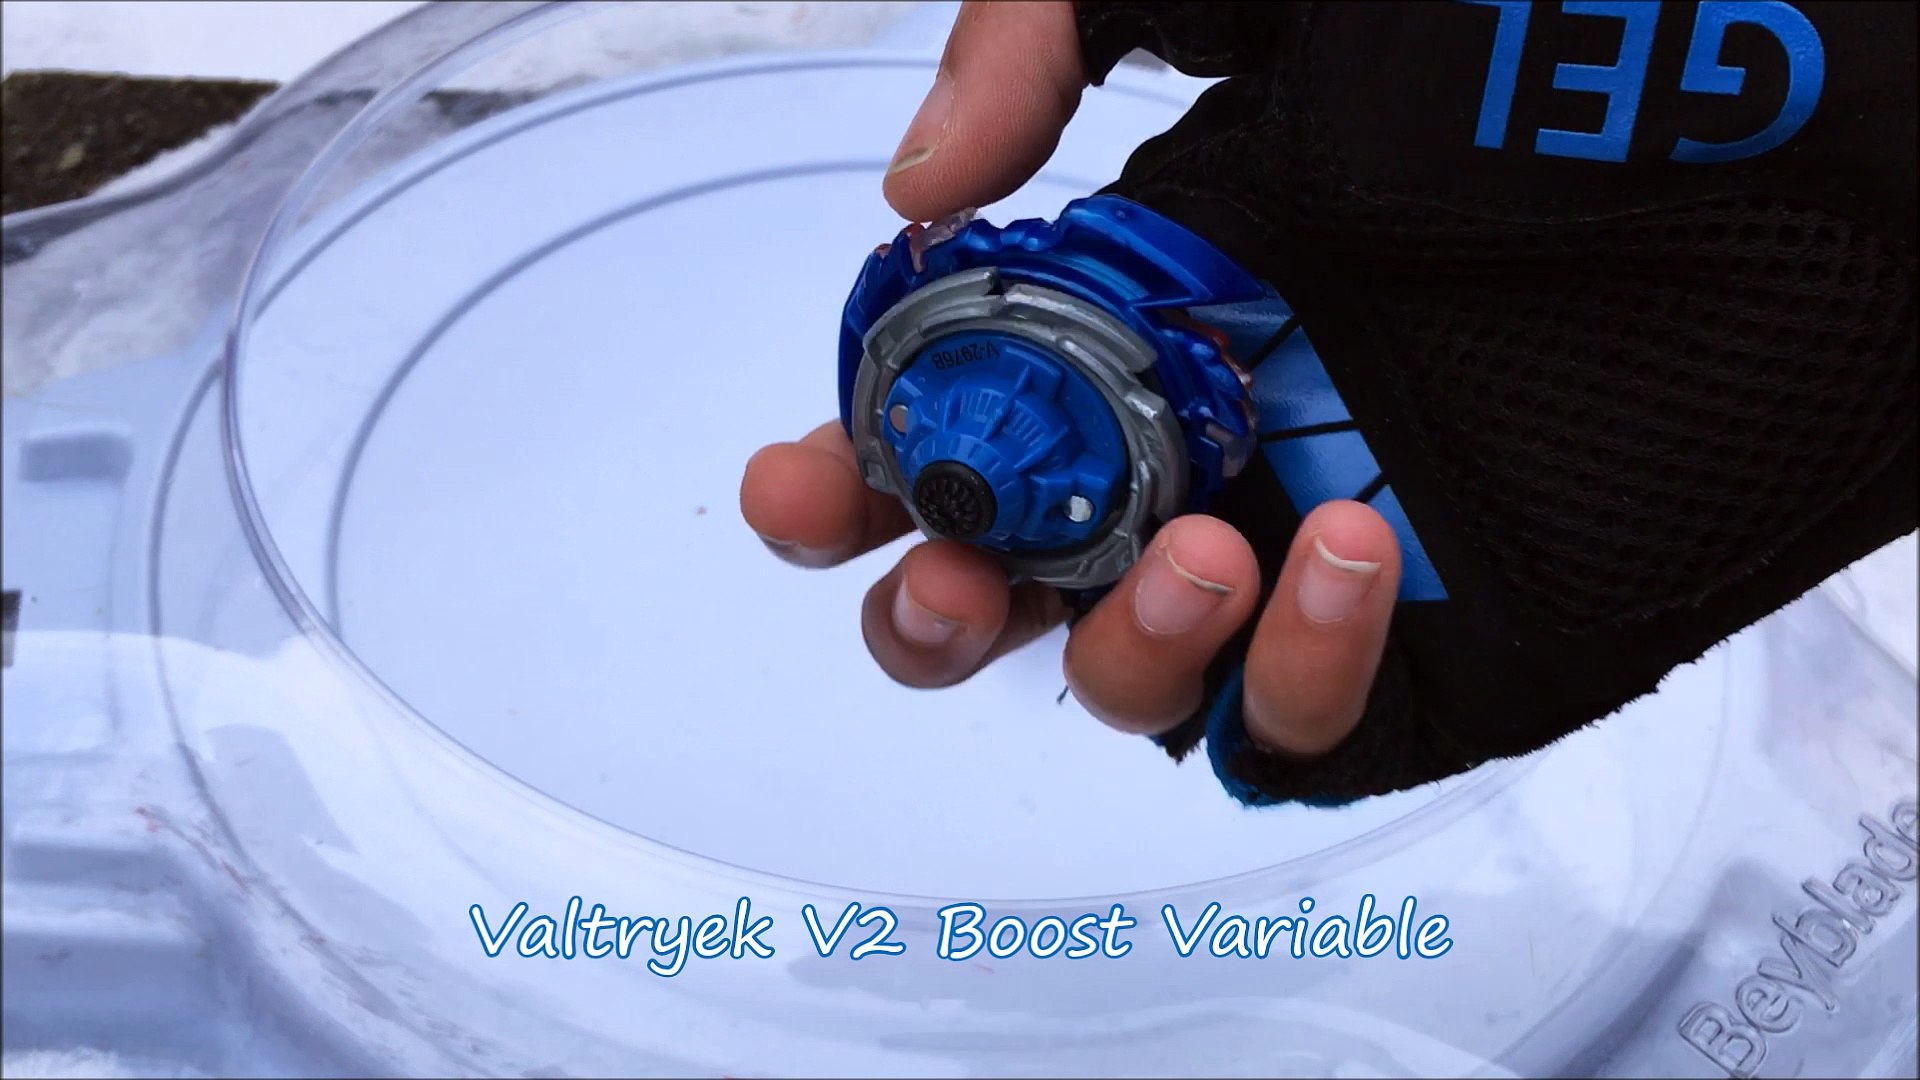 Valtryek V2 Boost Variable vs Valtryek V2 Limited Unite! - video Dailymotion